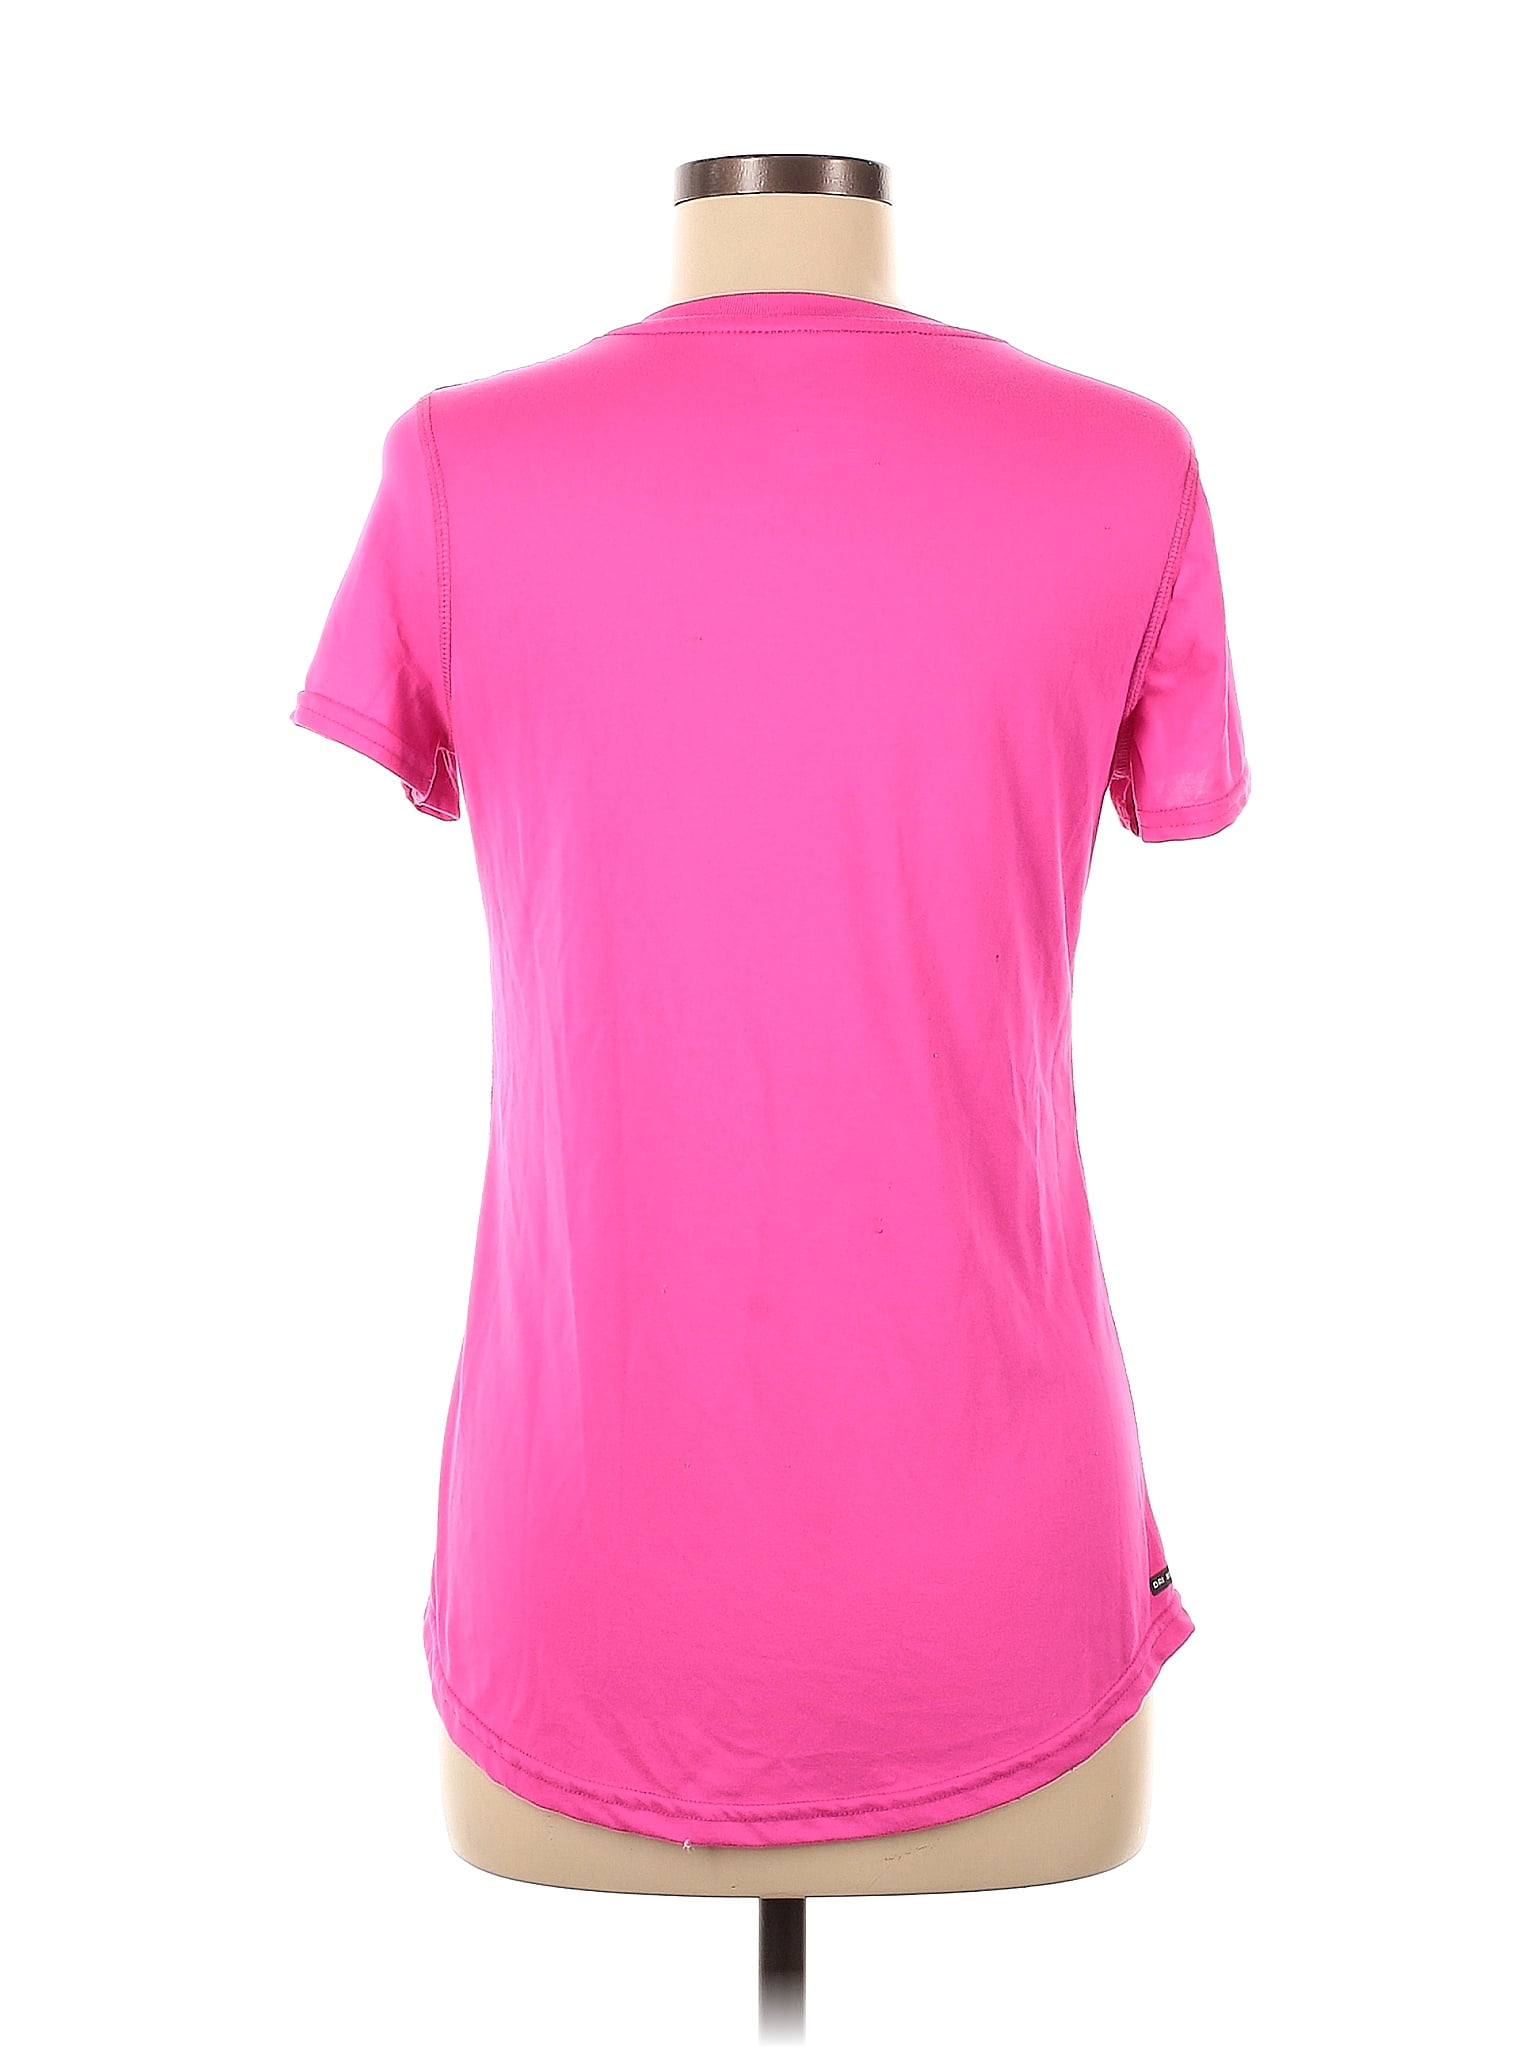 Danskin Multi Color Pink Active Pants Size L - 62% off